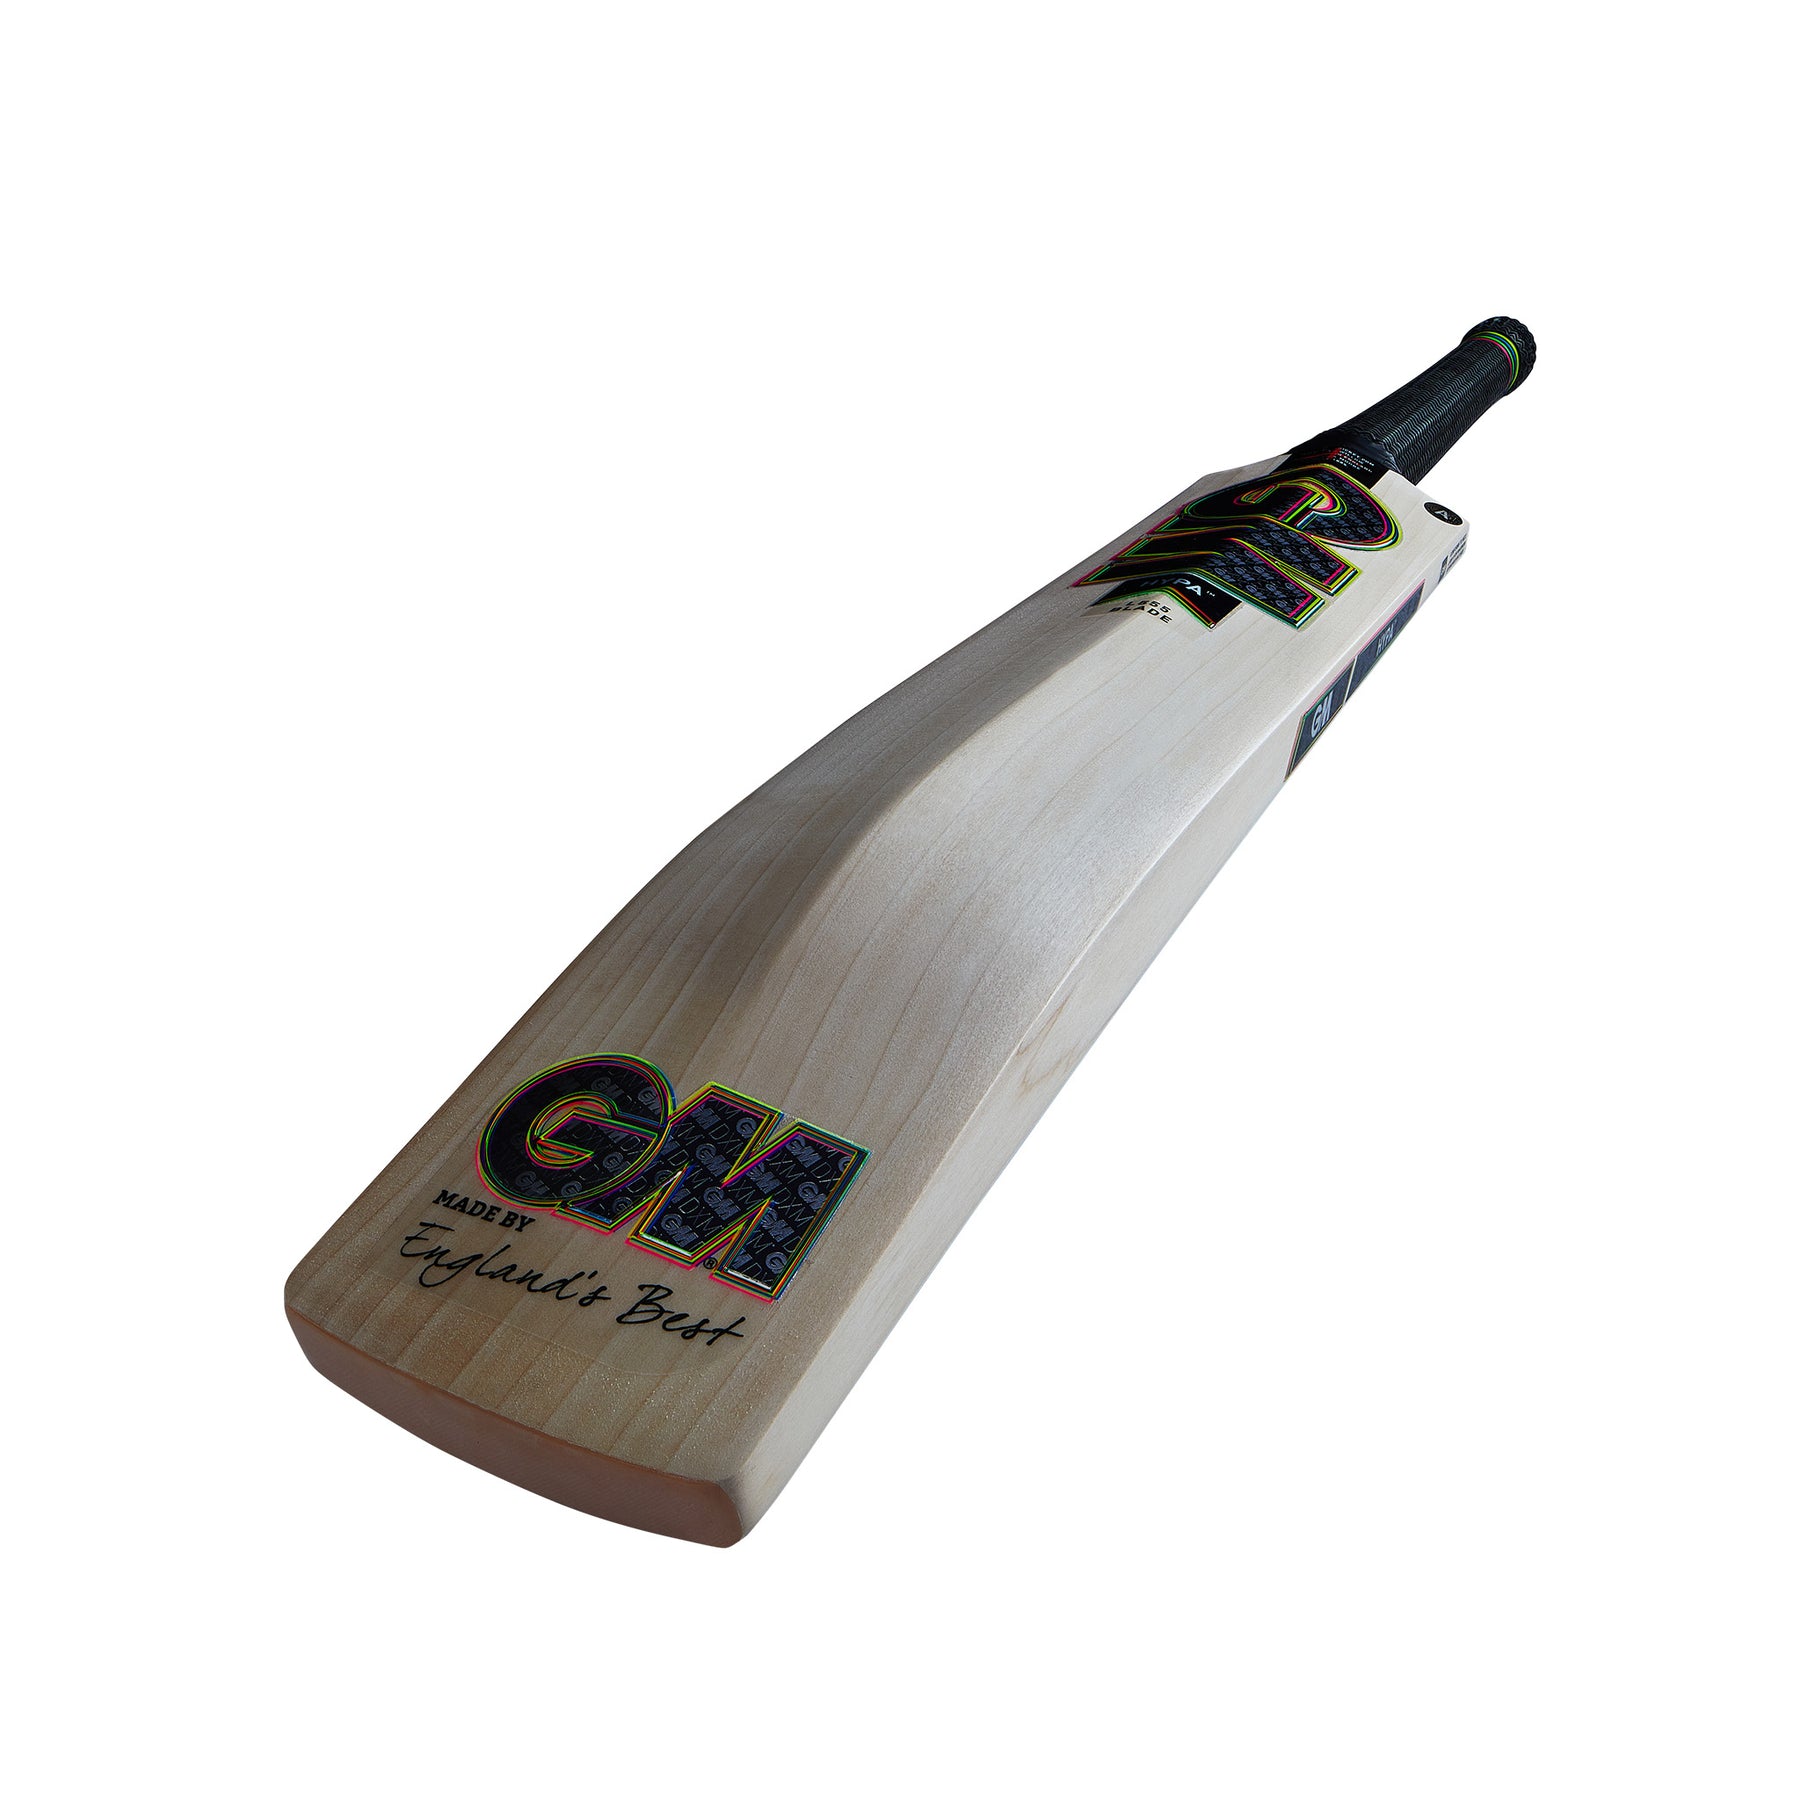 Gunn & Moore Hypa DXM 707 Junior Cricket Bat